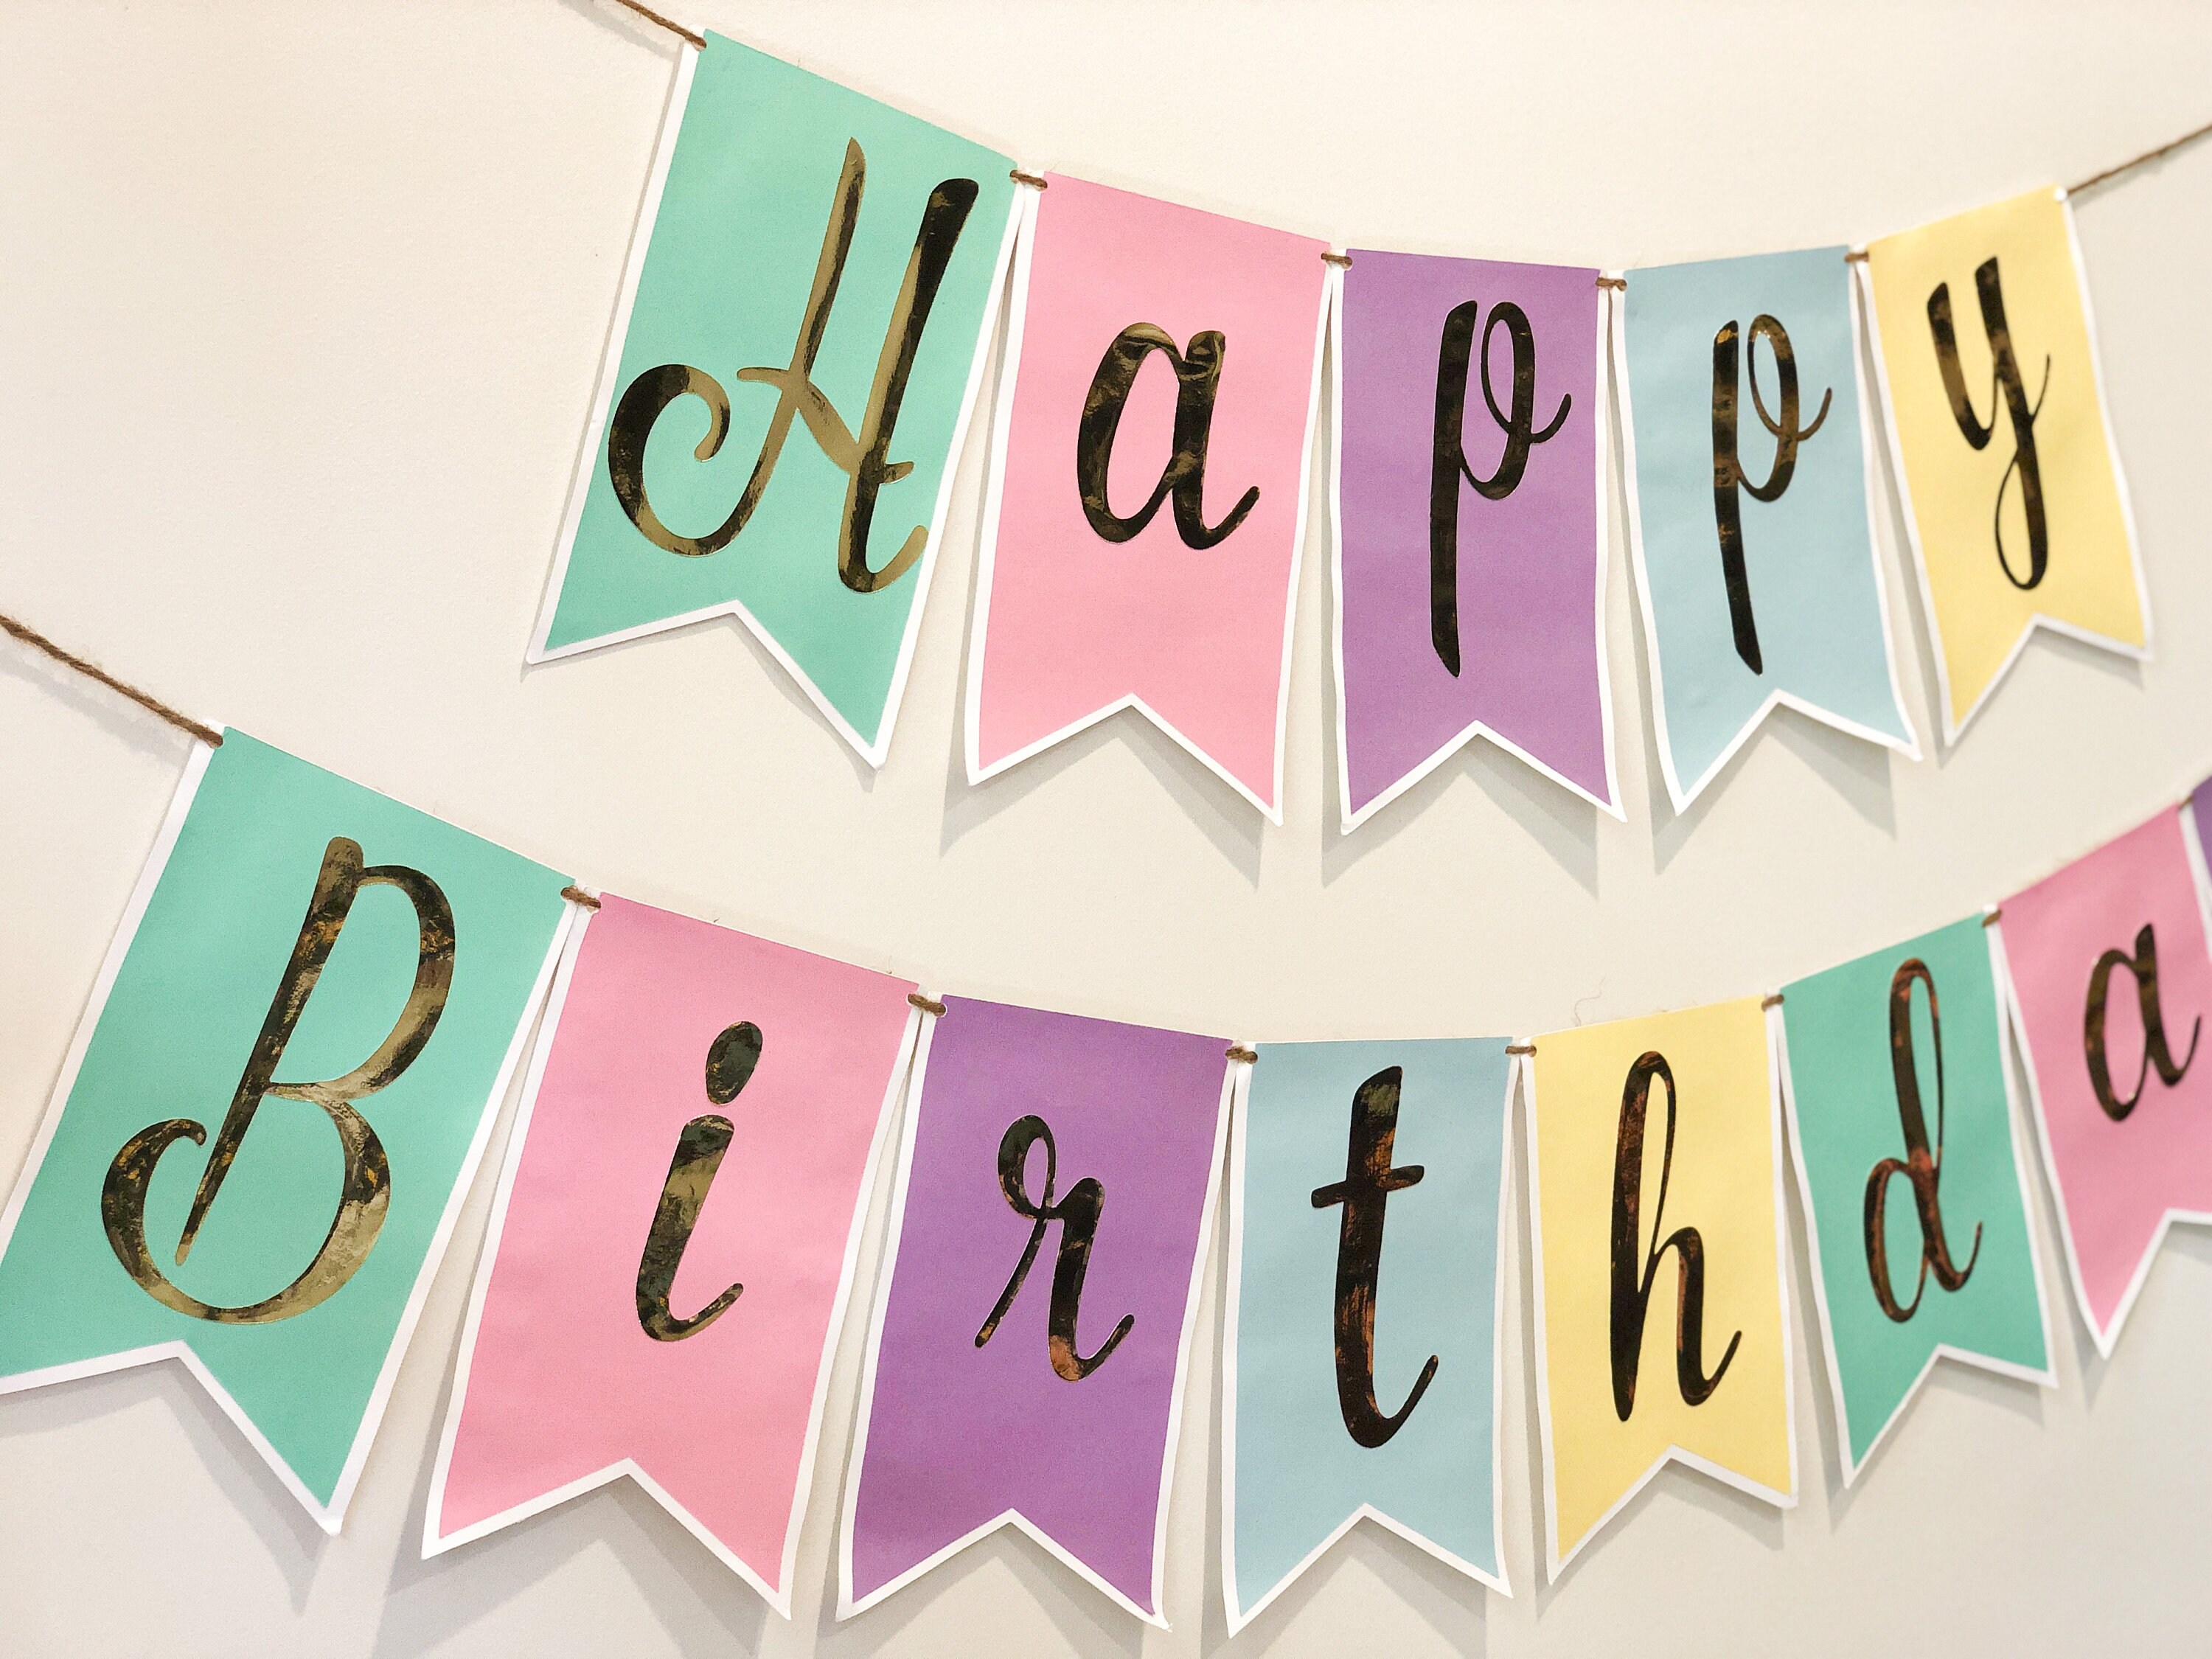 Happy Birthday Burlap Banner, Happy Birthday Pastel Colors, Custom Personalized  Birthday Banner, Pastel Rainbow 1st Birthday Decorations 